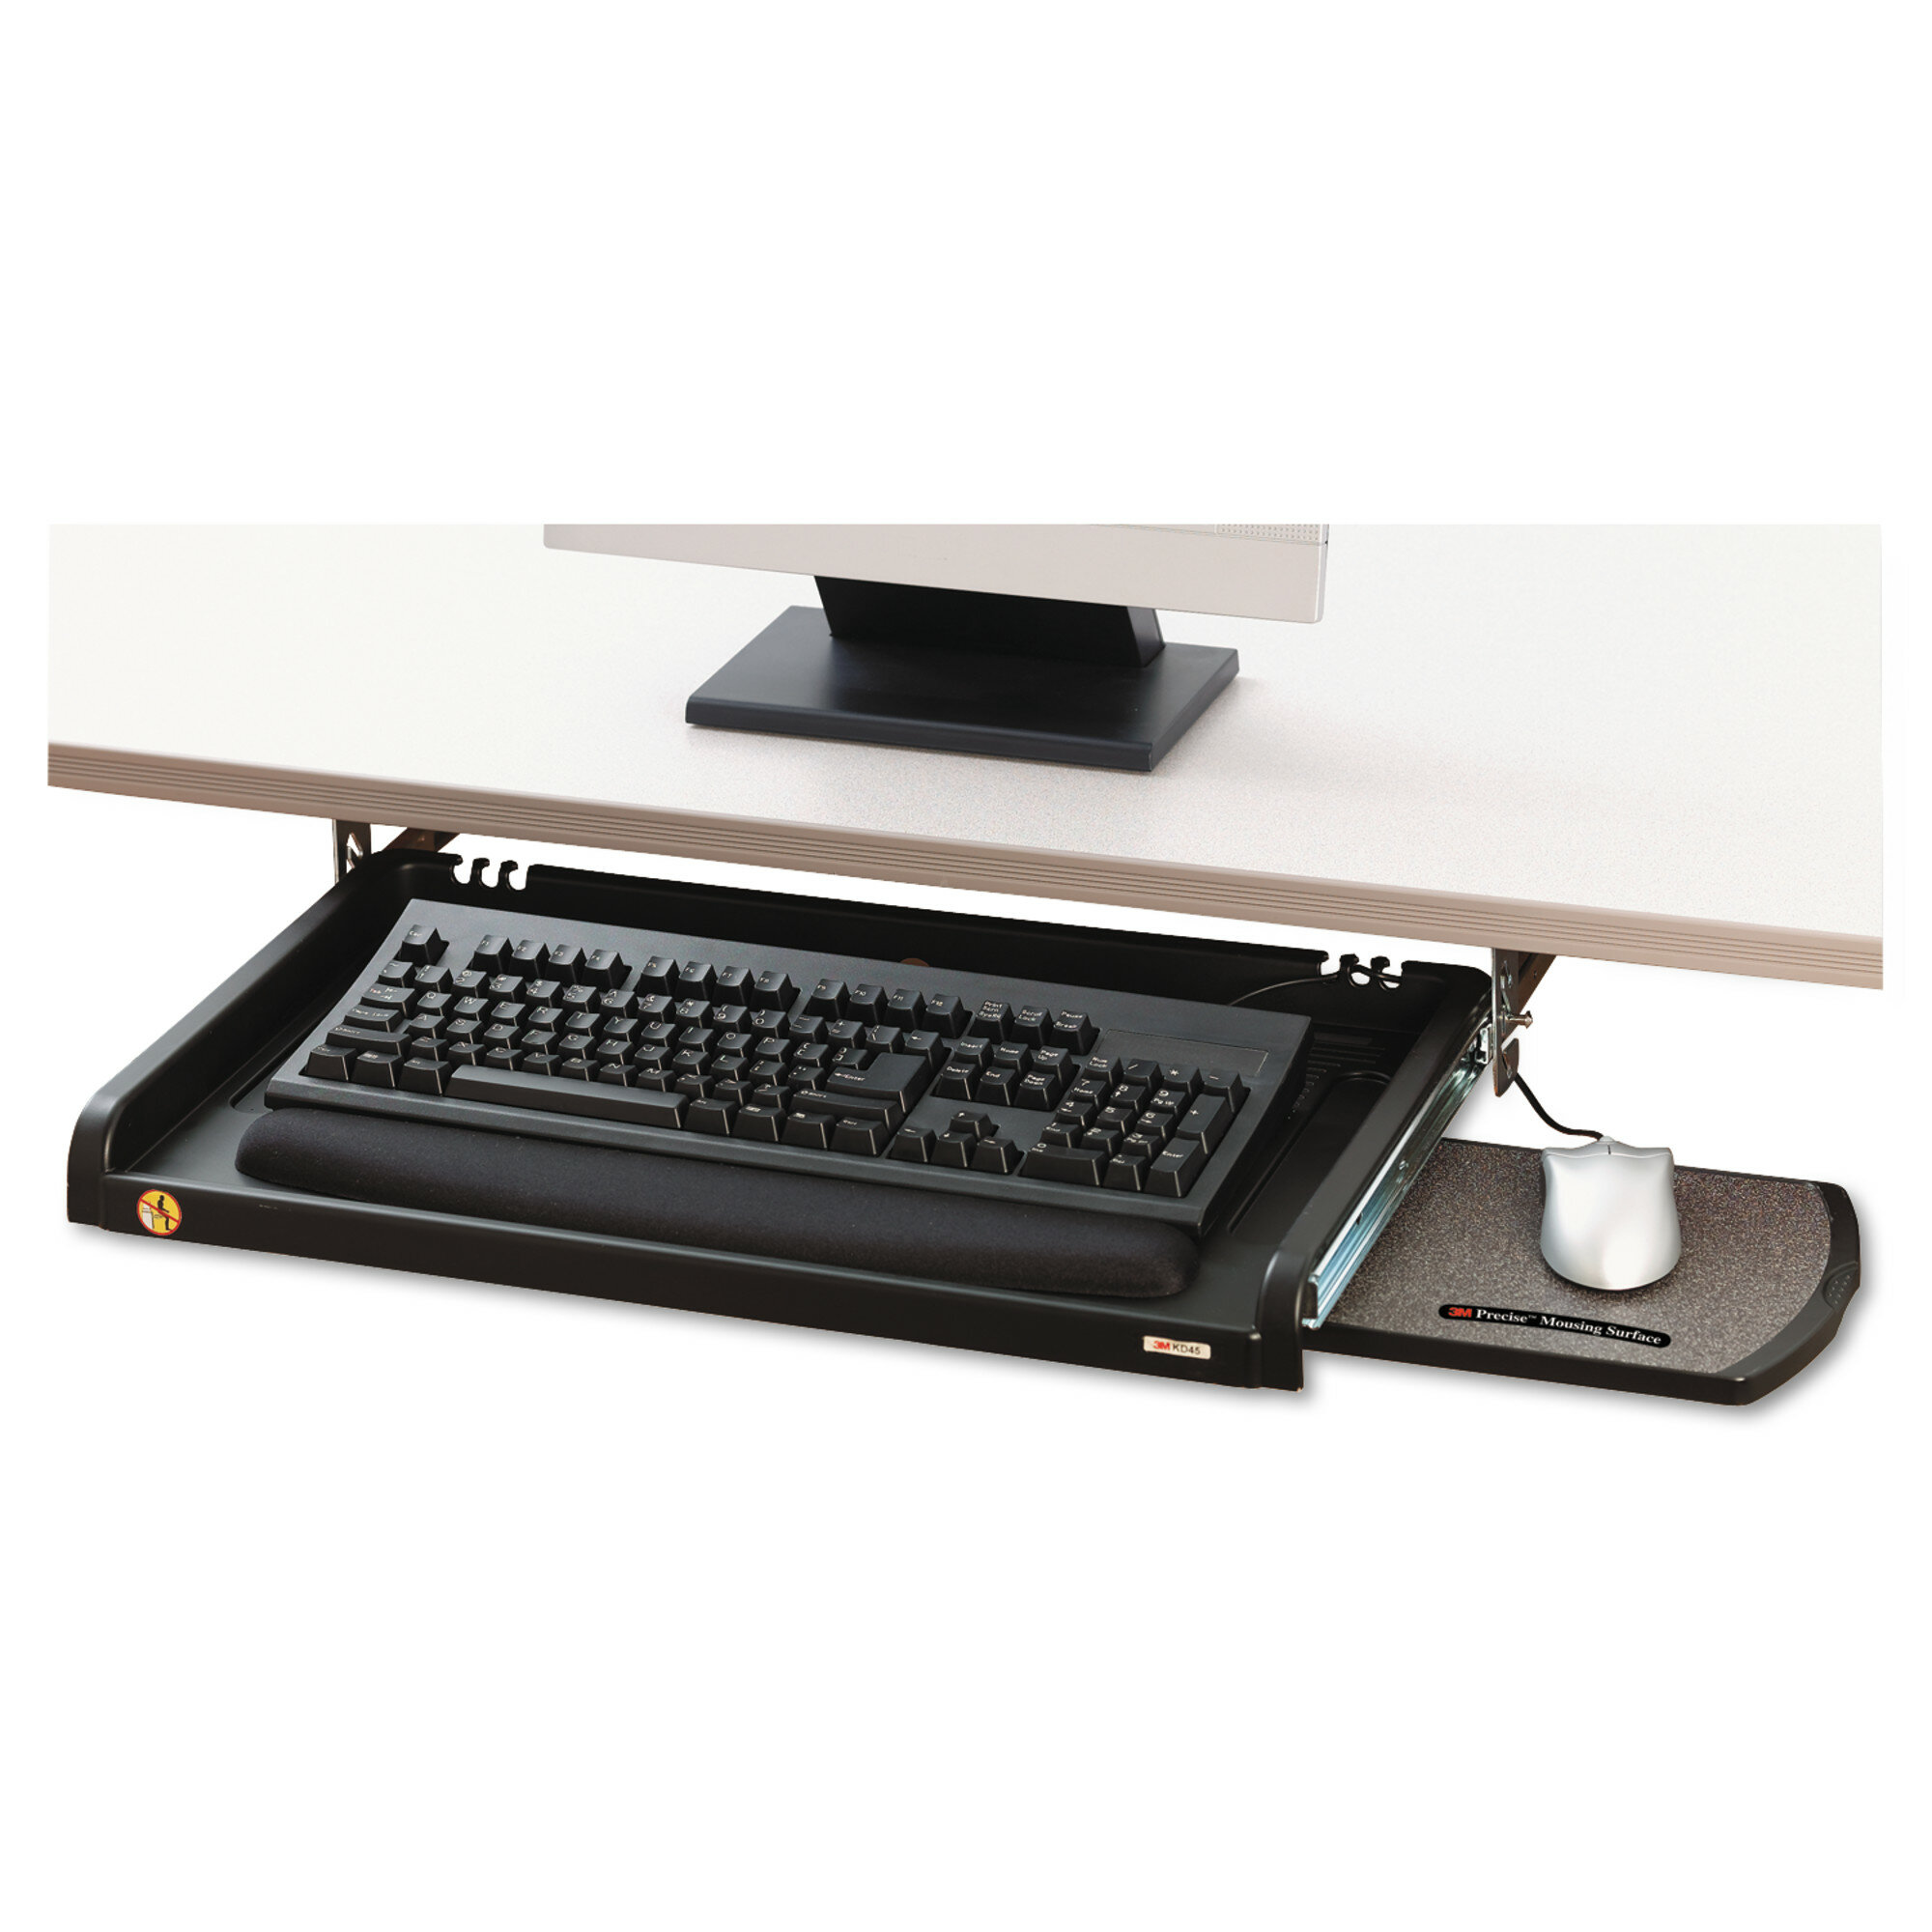 3m Adjustable Underdesk 26 4 H X 23 W Desk Keyboard Tray